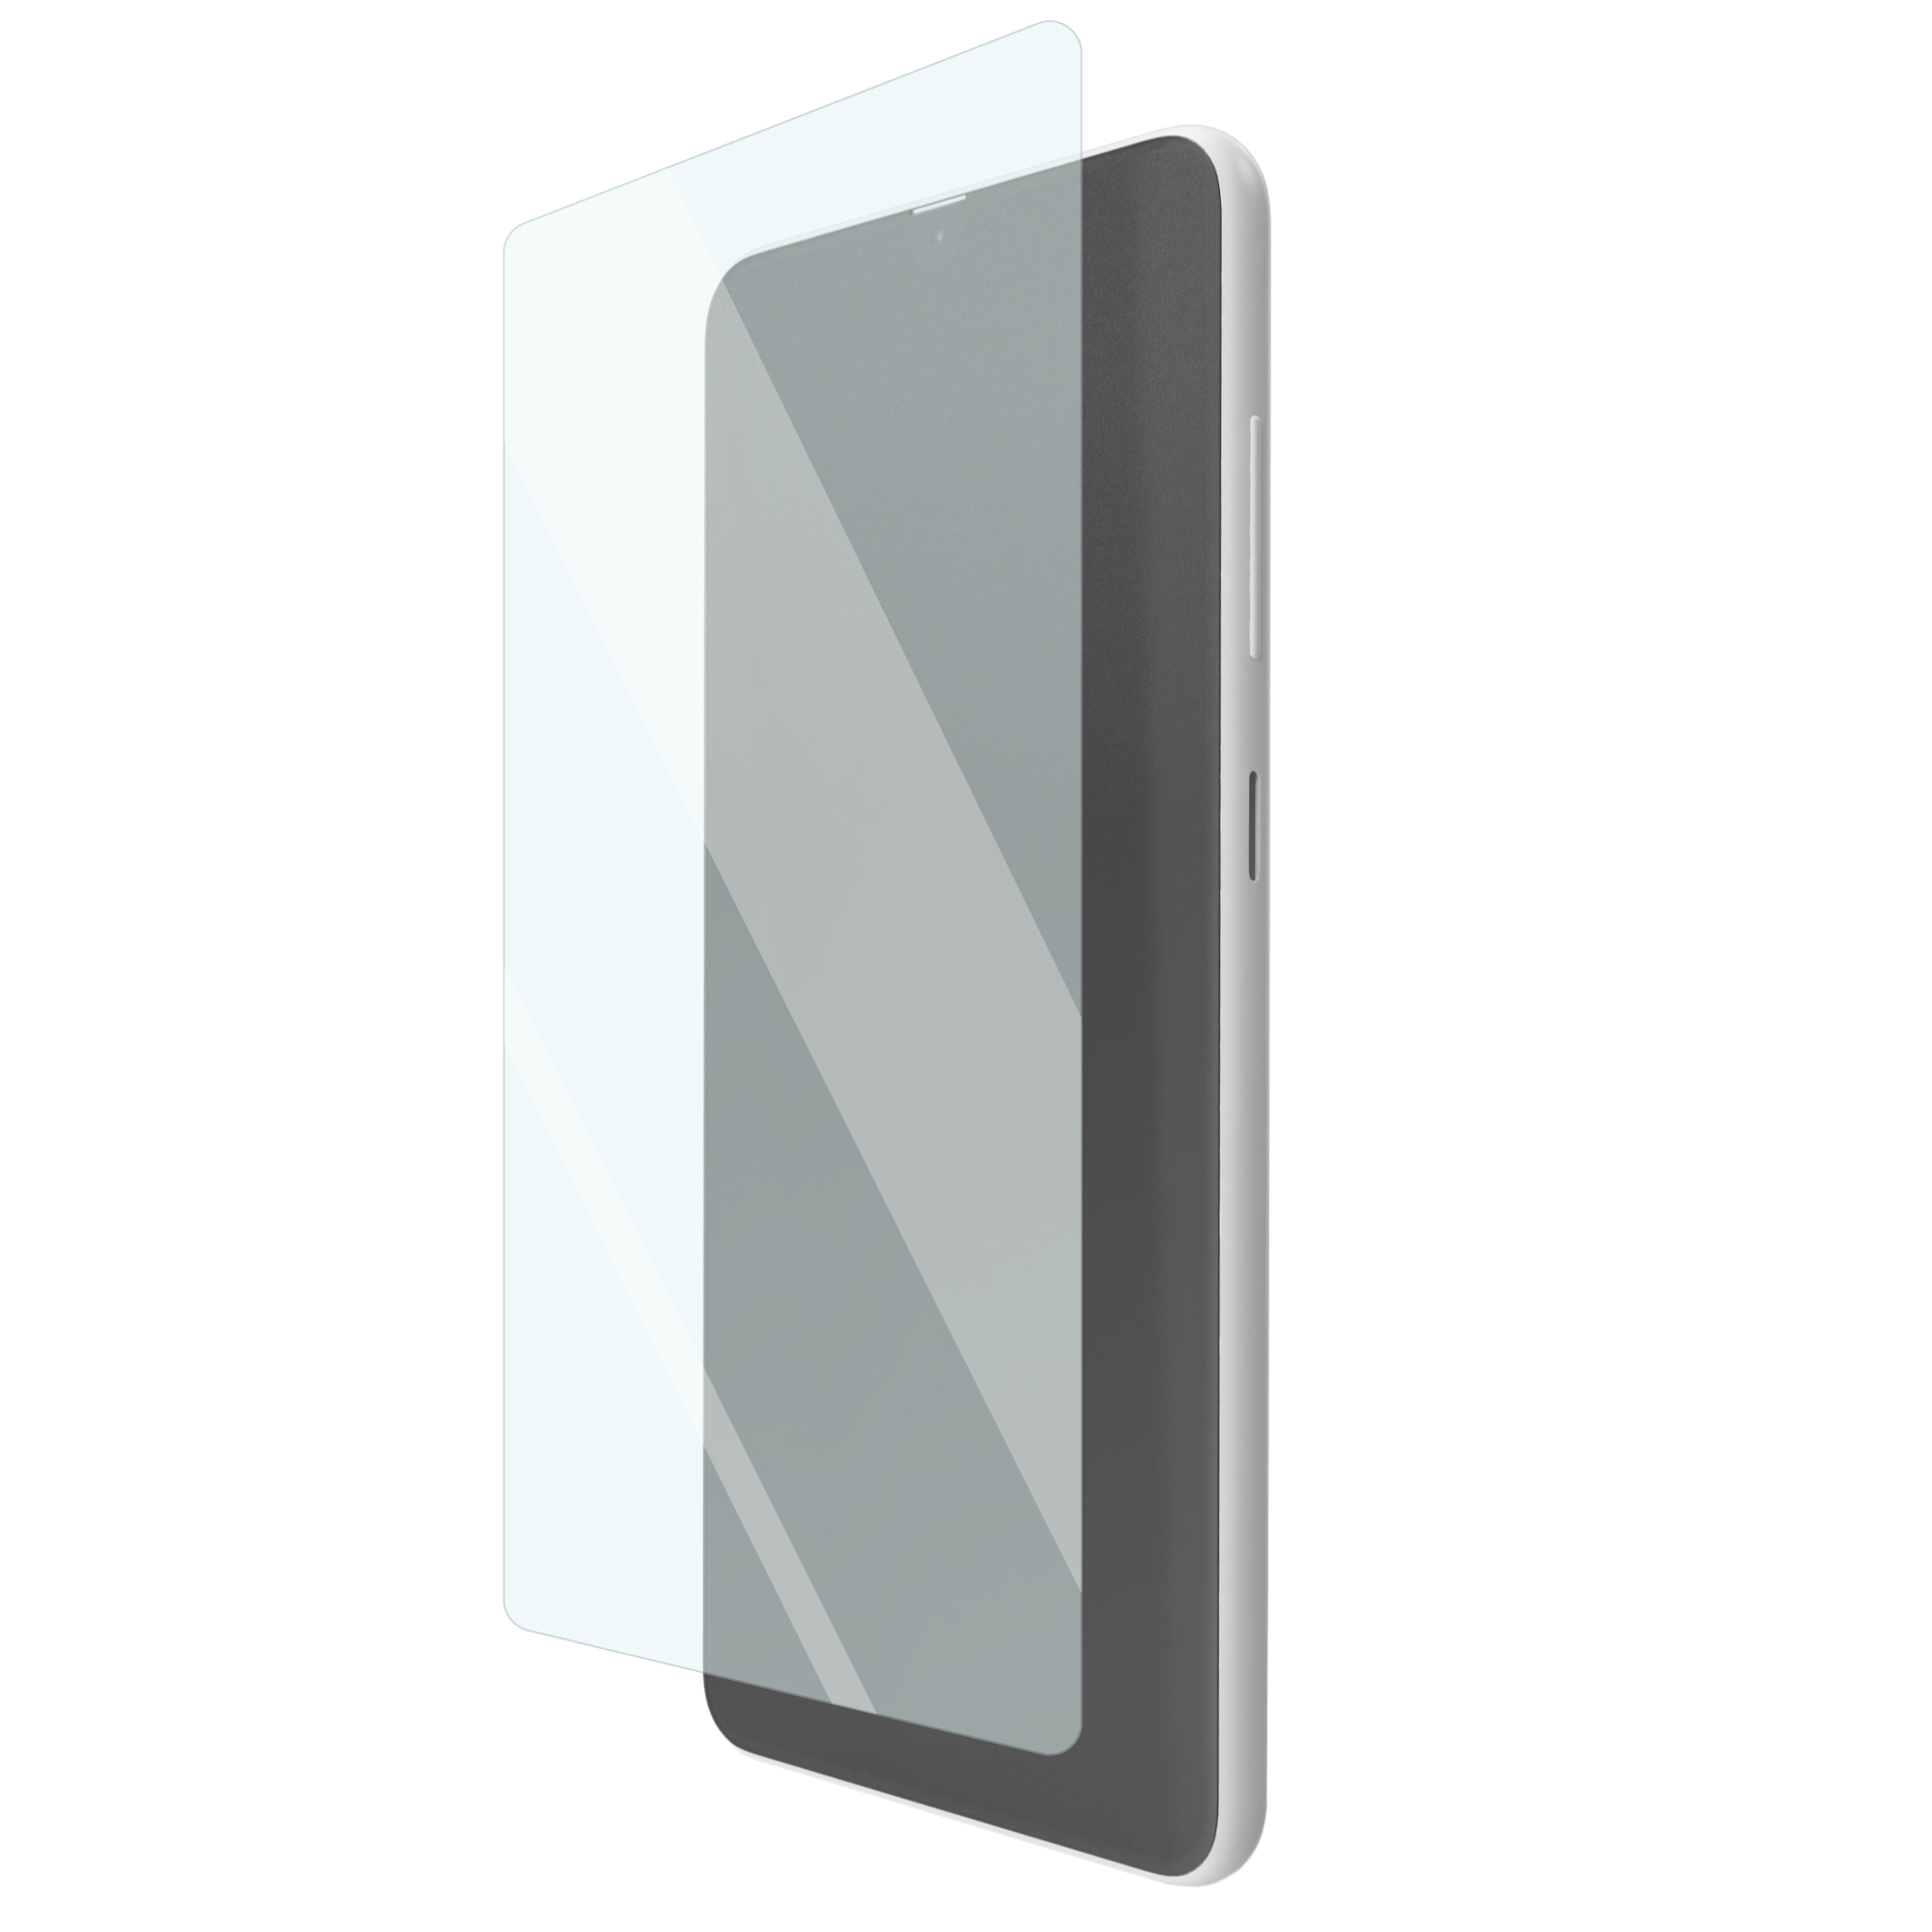 Folie de protectie silicon ShieldUP HiTech Regenerable pentru Apple iPhone 8 thumb